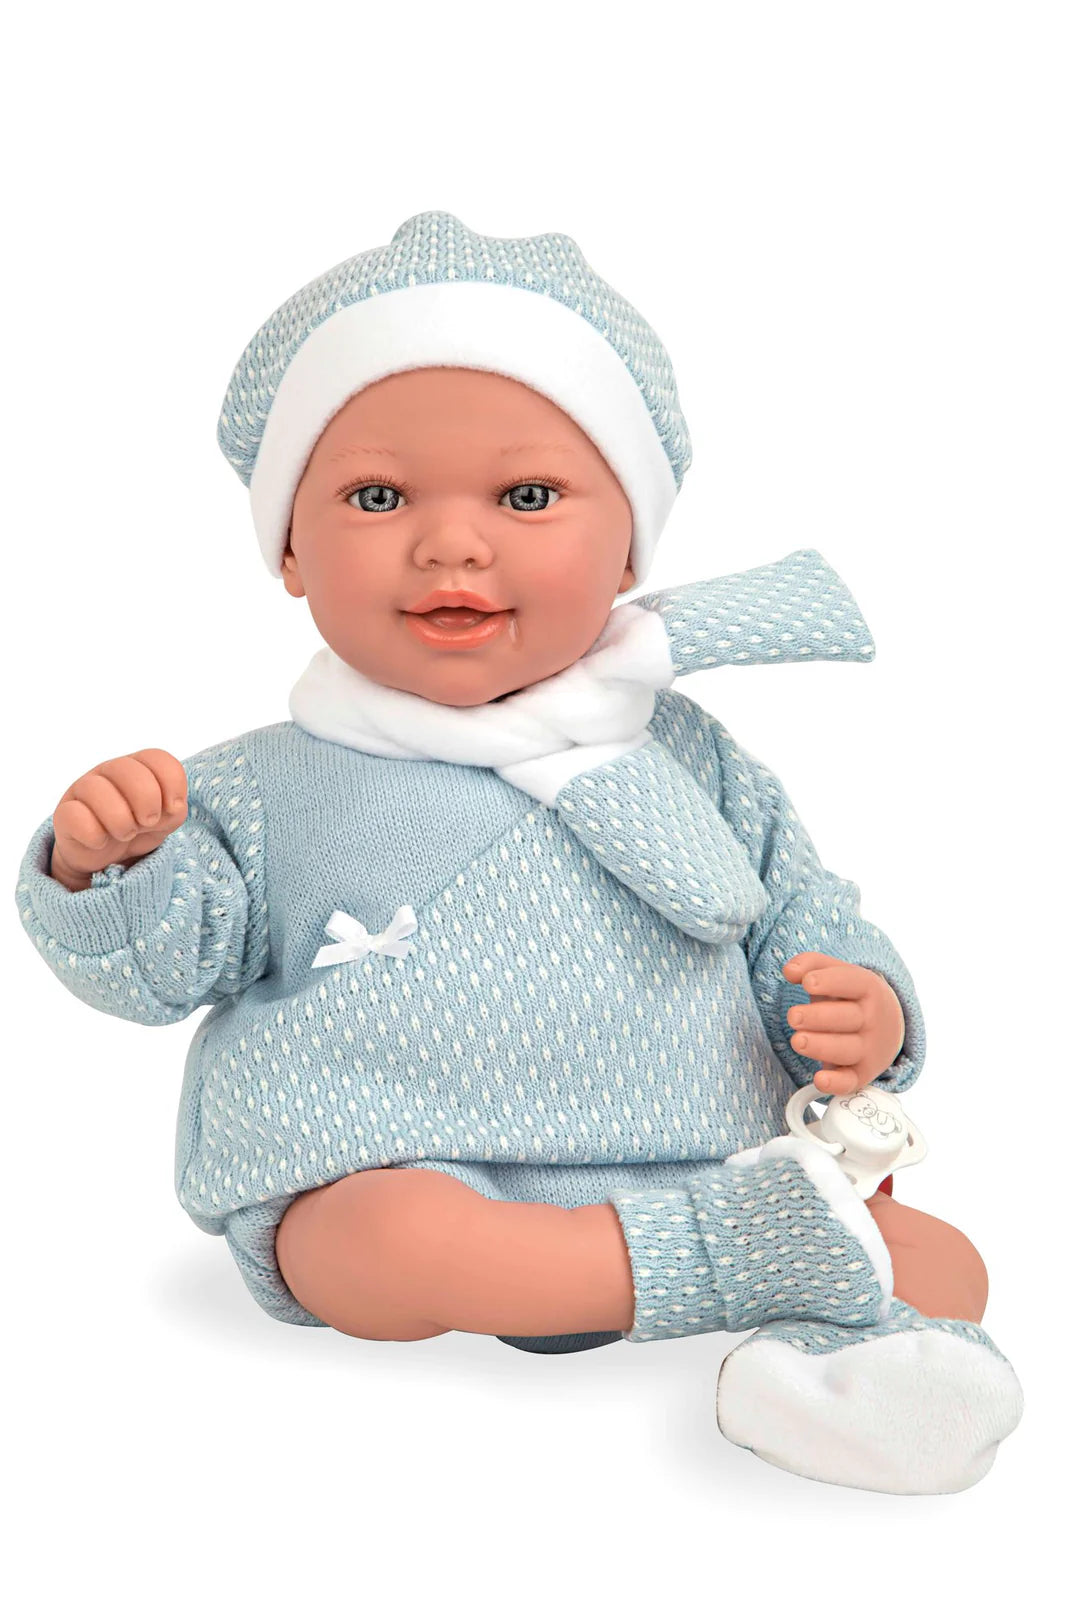 65350 Adi Blue Boy 45cm Doll by Arias - Laughing Doll